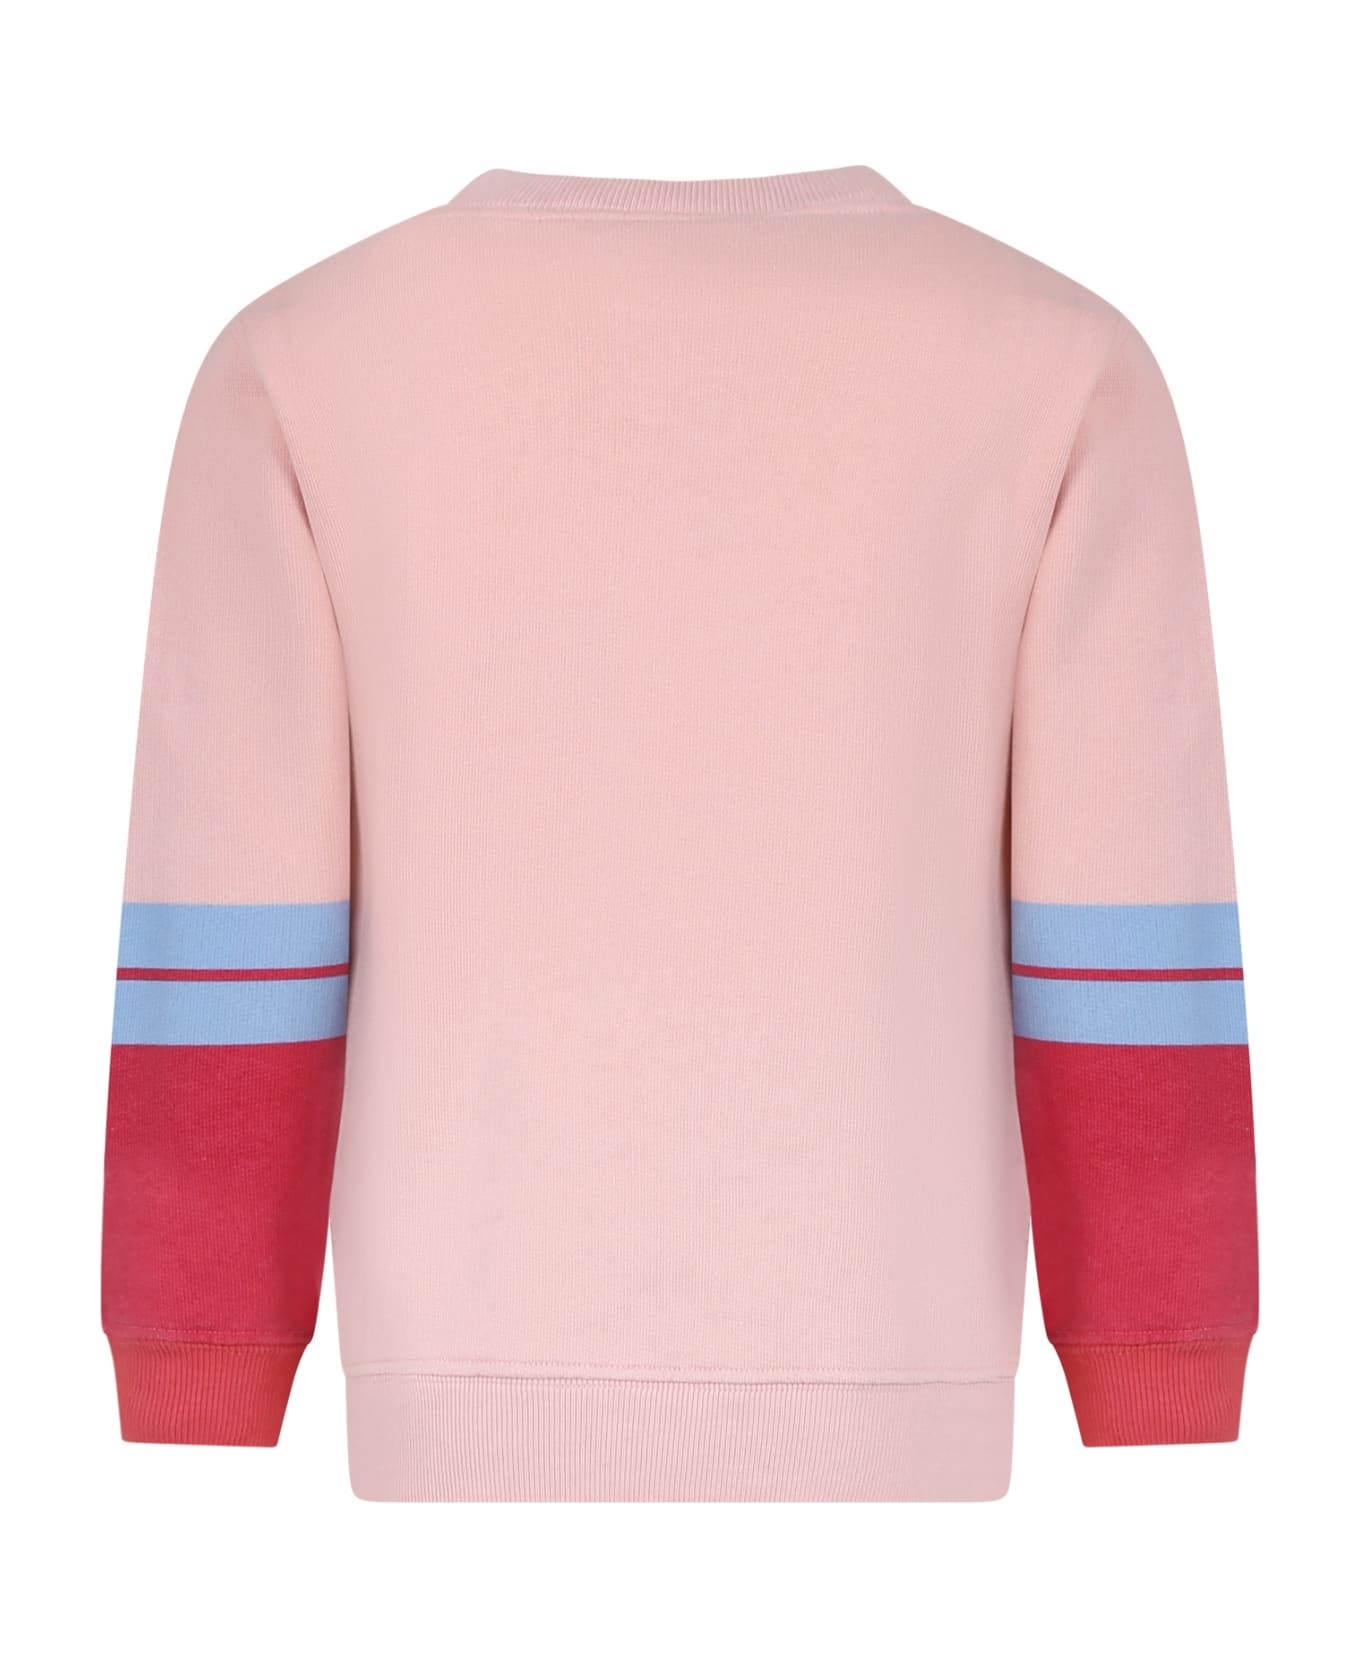 Gucci Rose Sweatshirt For Girl With Logo - PINK ニットウェア＆スウェットシャツ